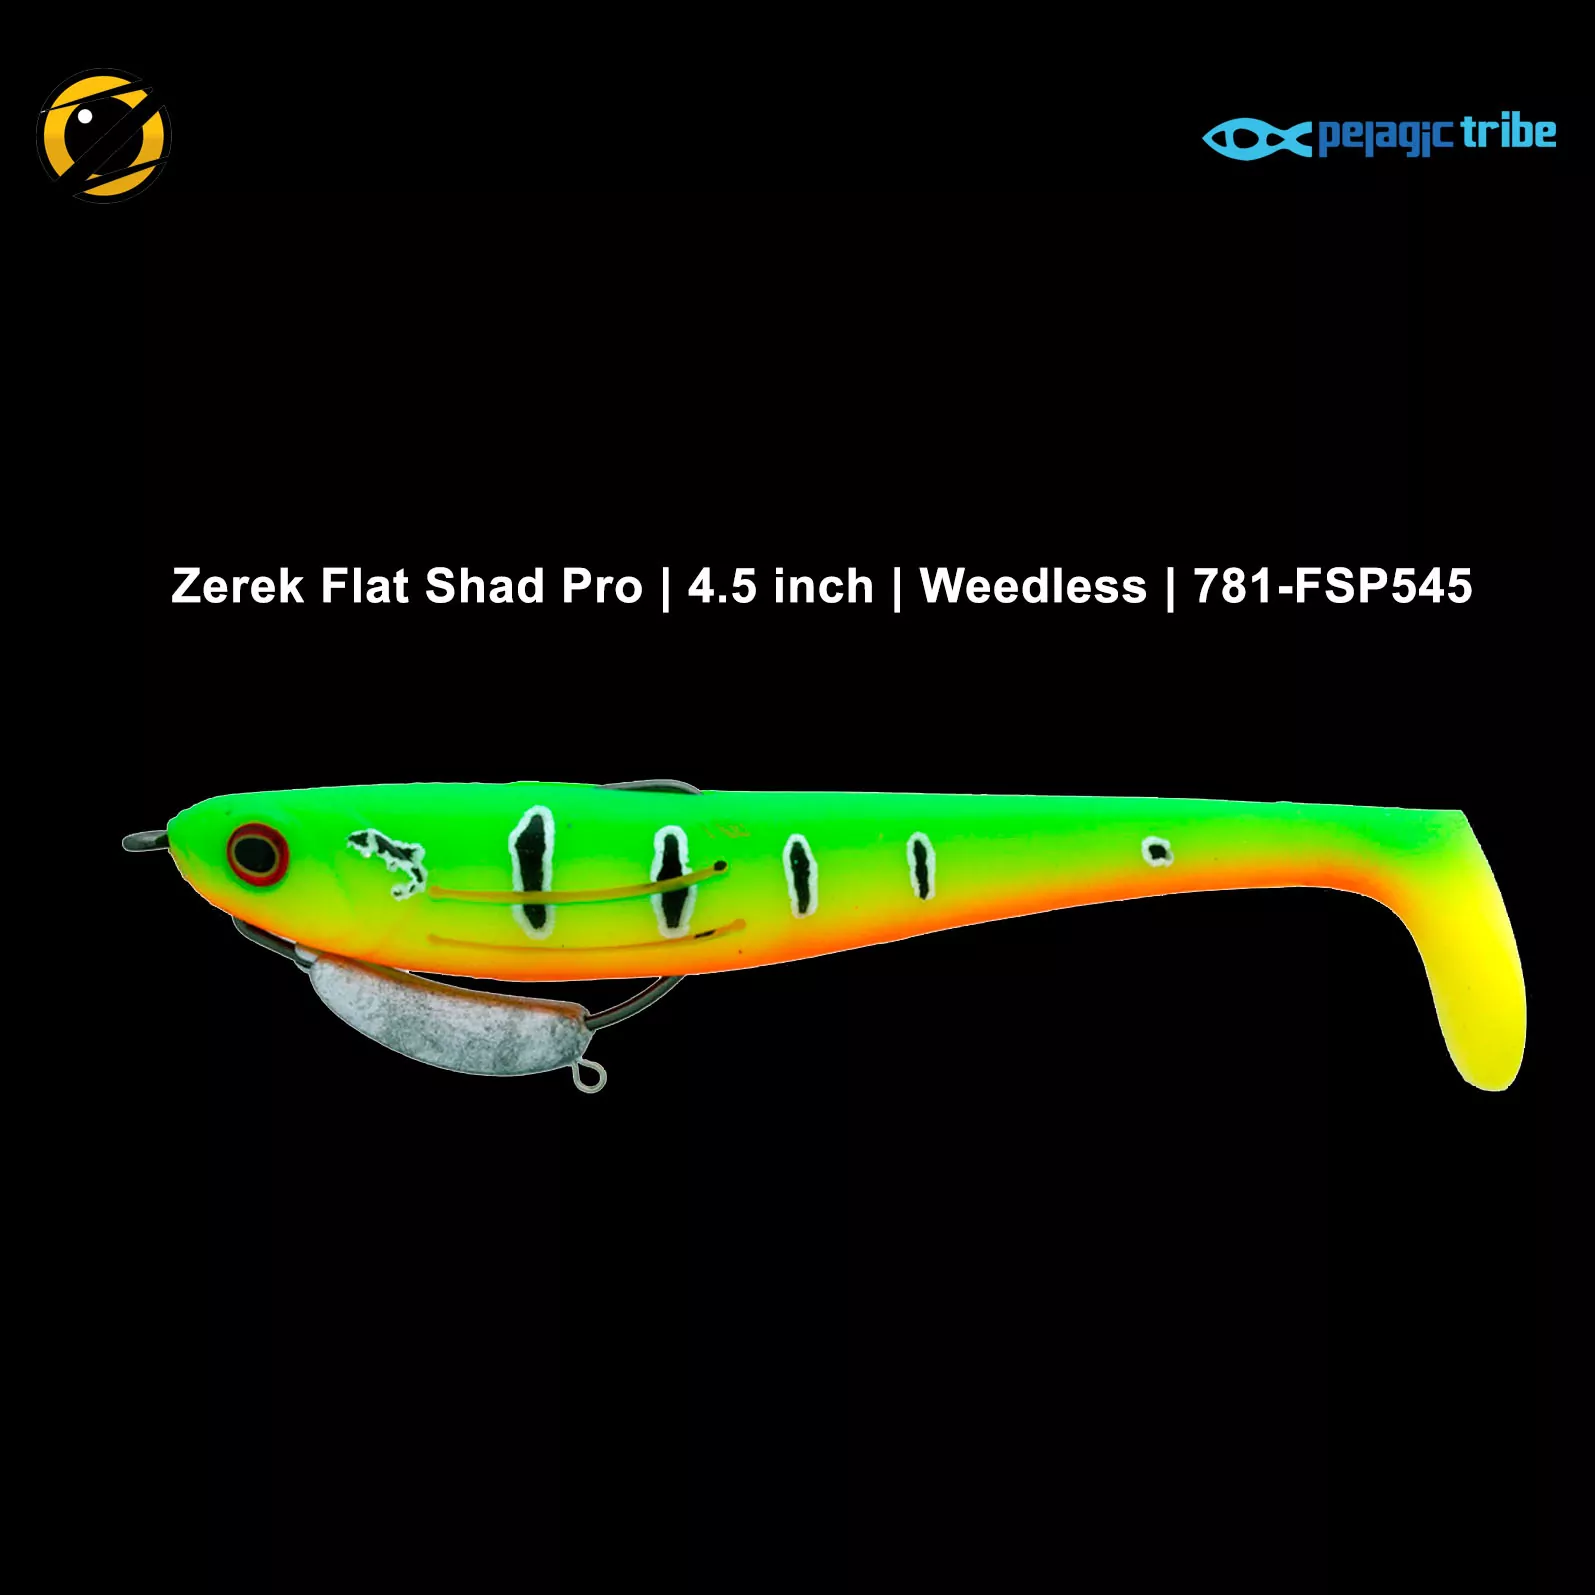 Zerek Flat Shad Pro, 4.5 inch, Weedless